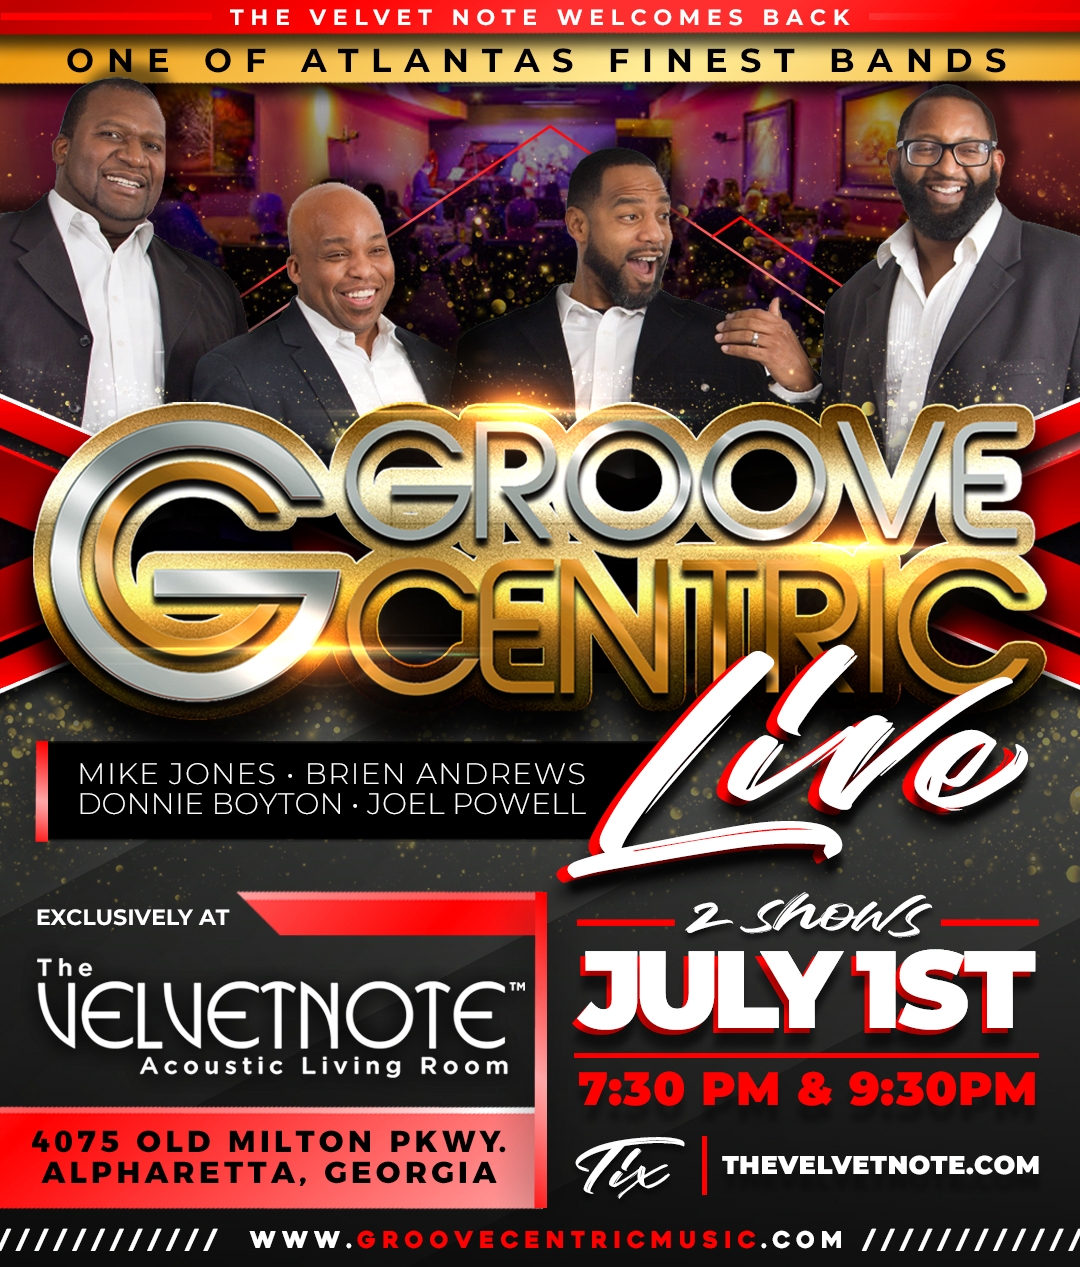 Friday, July 1st: Groove Centric | The Velvet Note